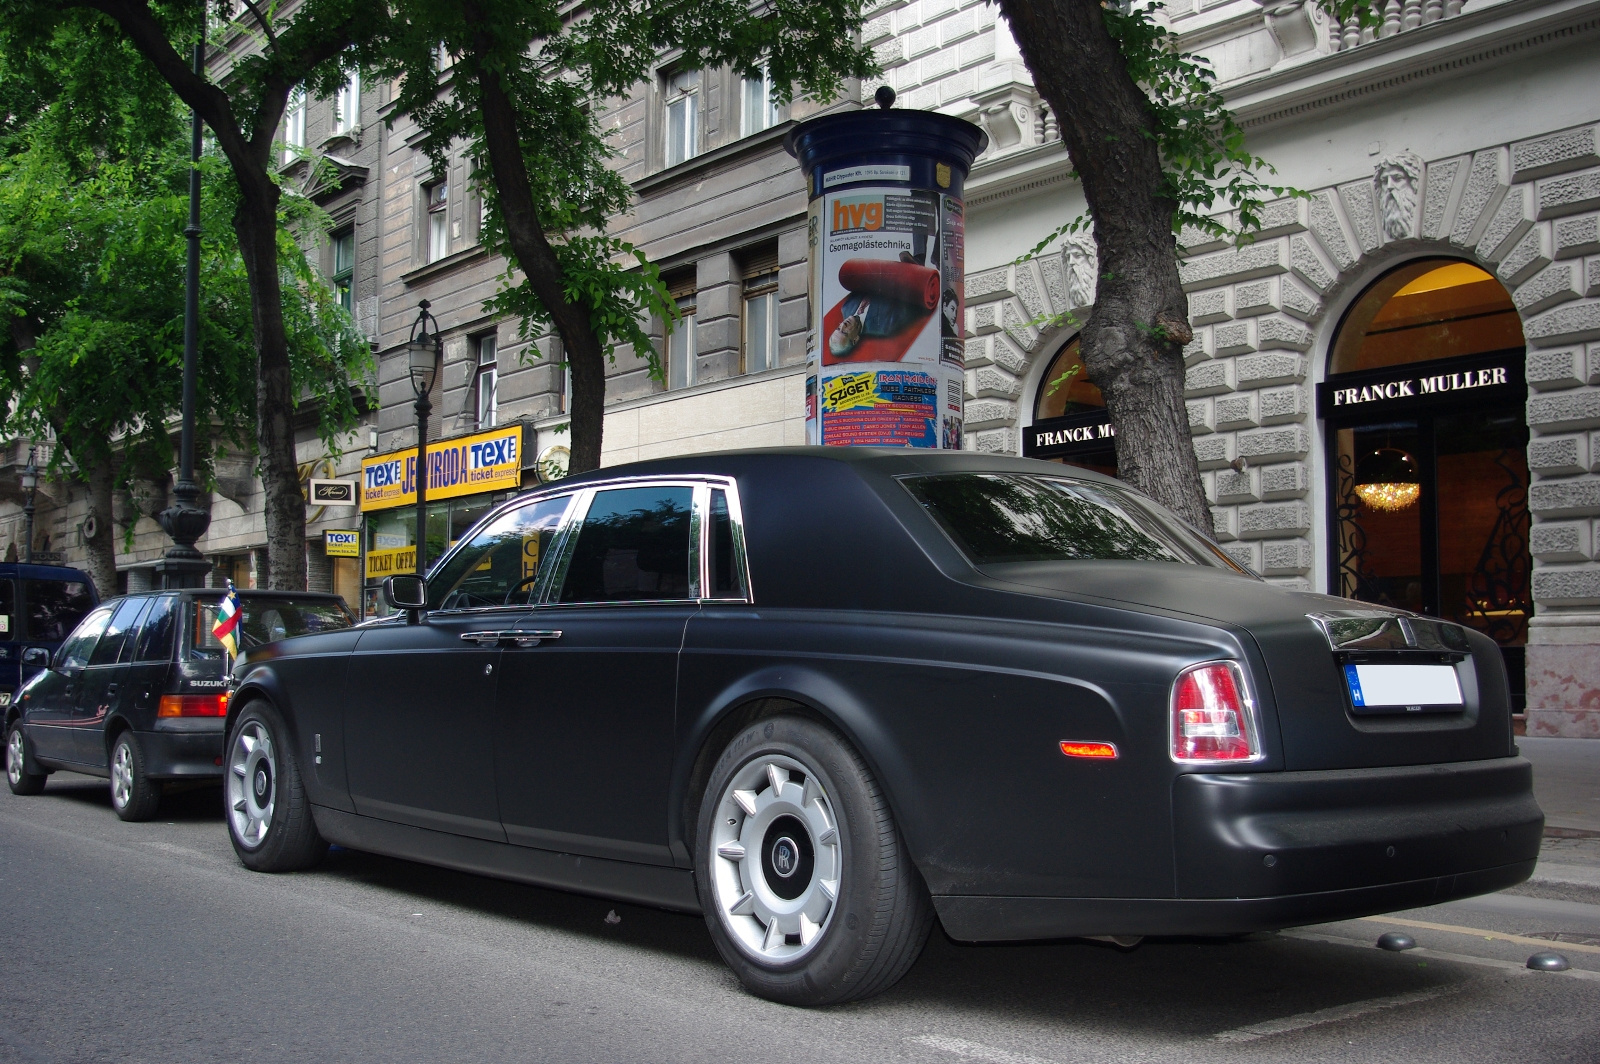 Rolls Royce Phantom (35)